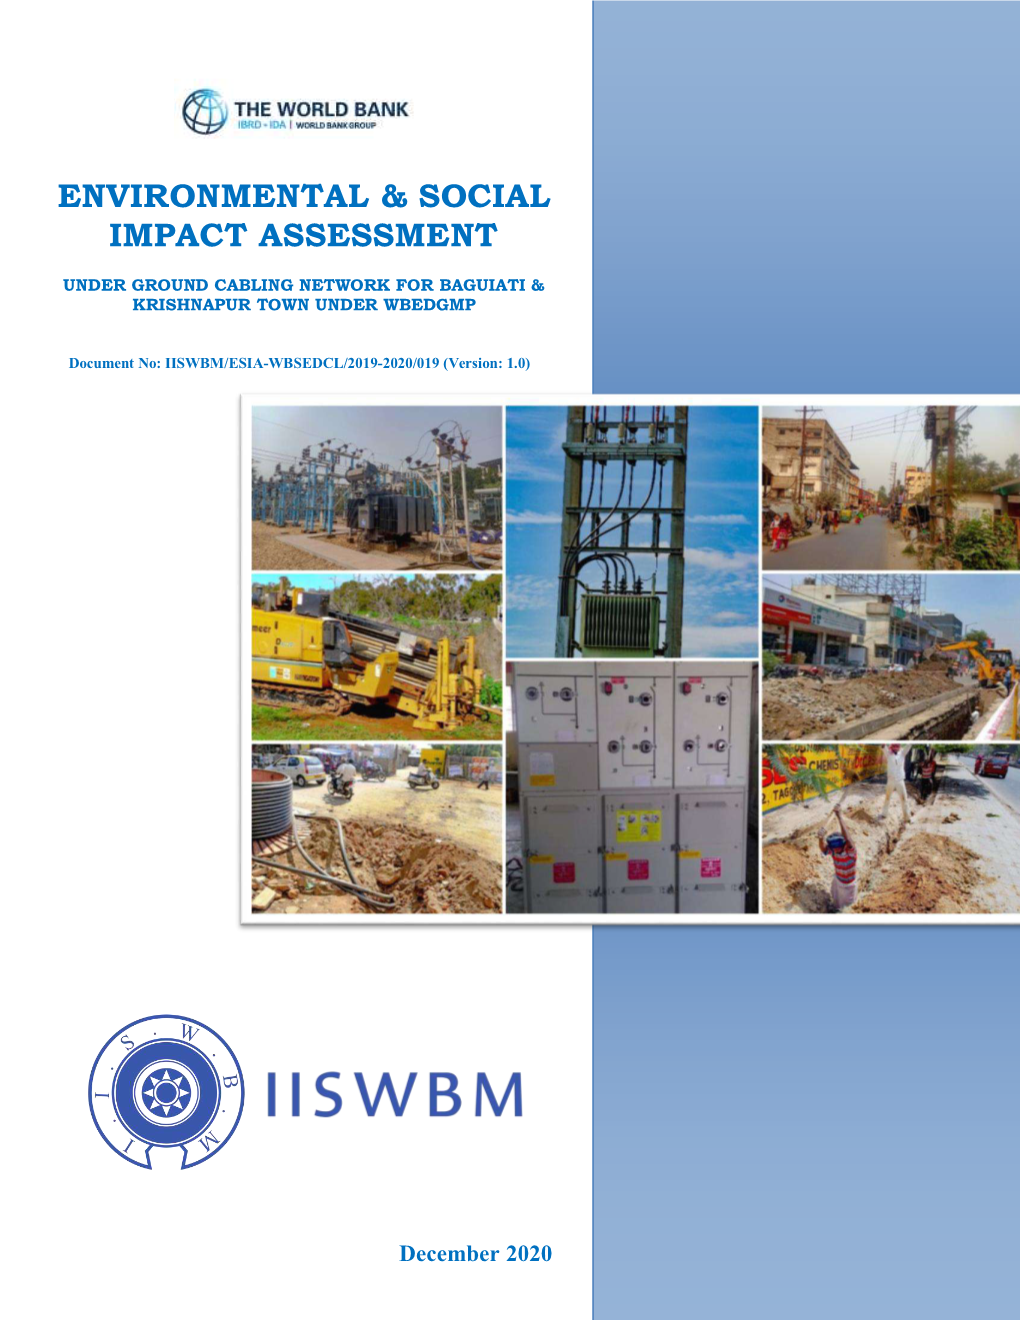 Environmental & Social Impact Assessment